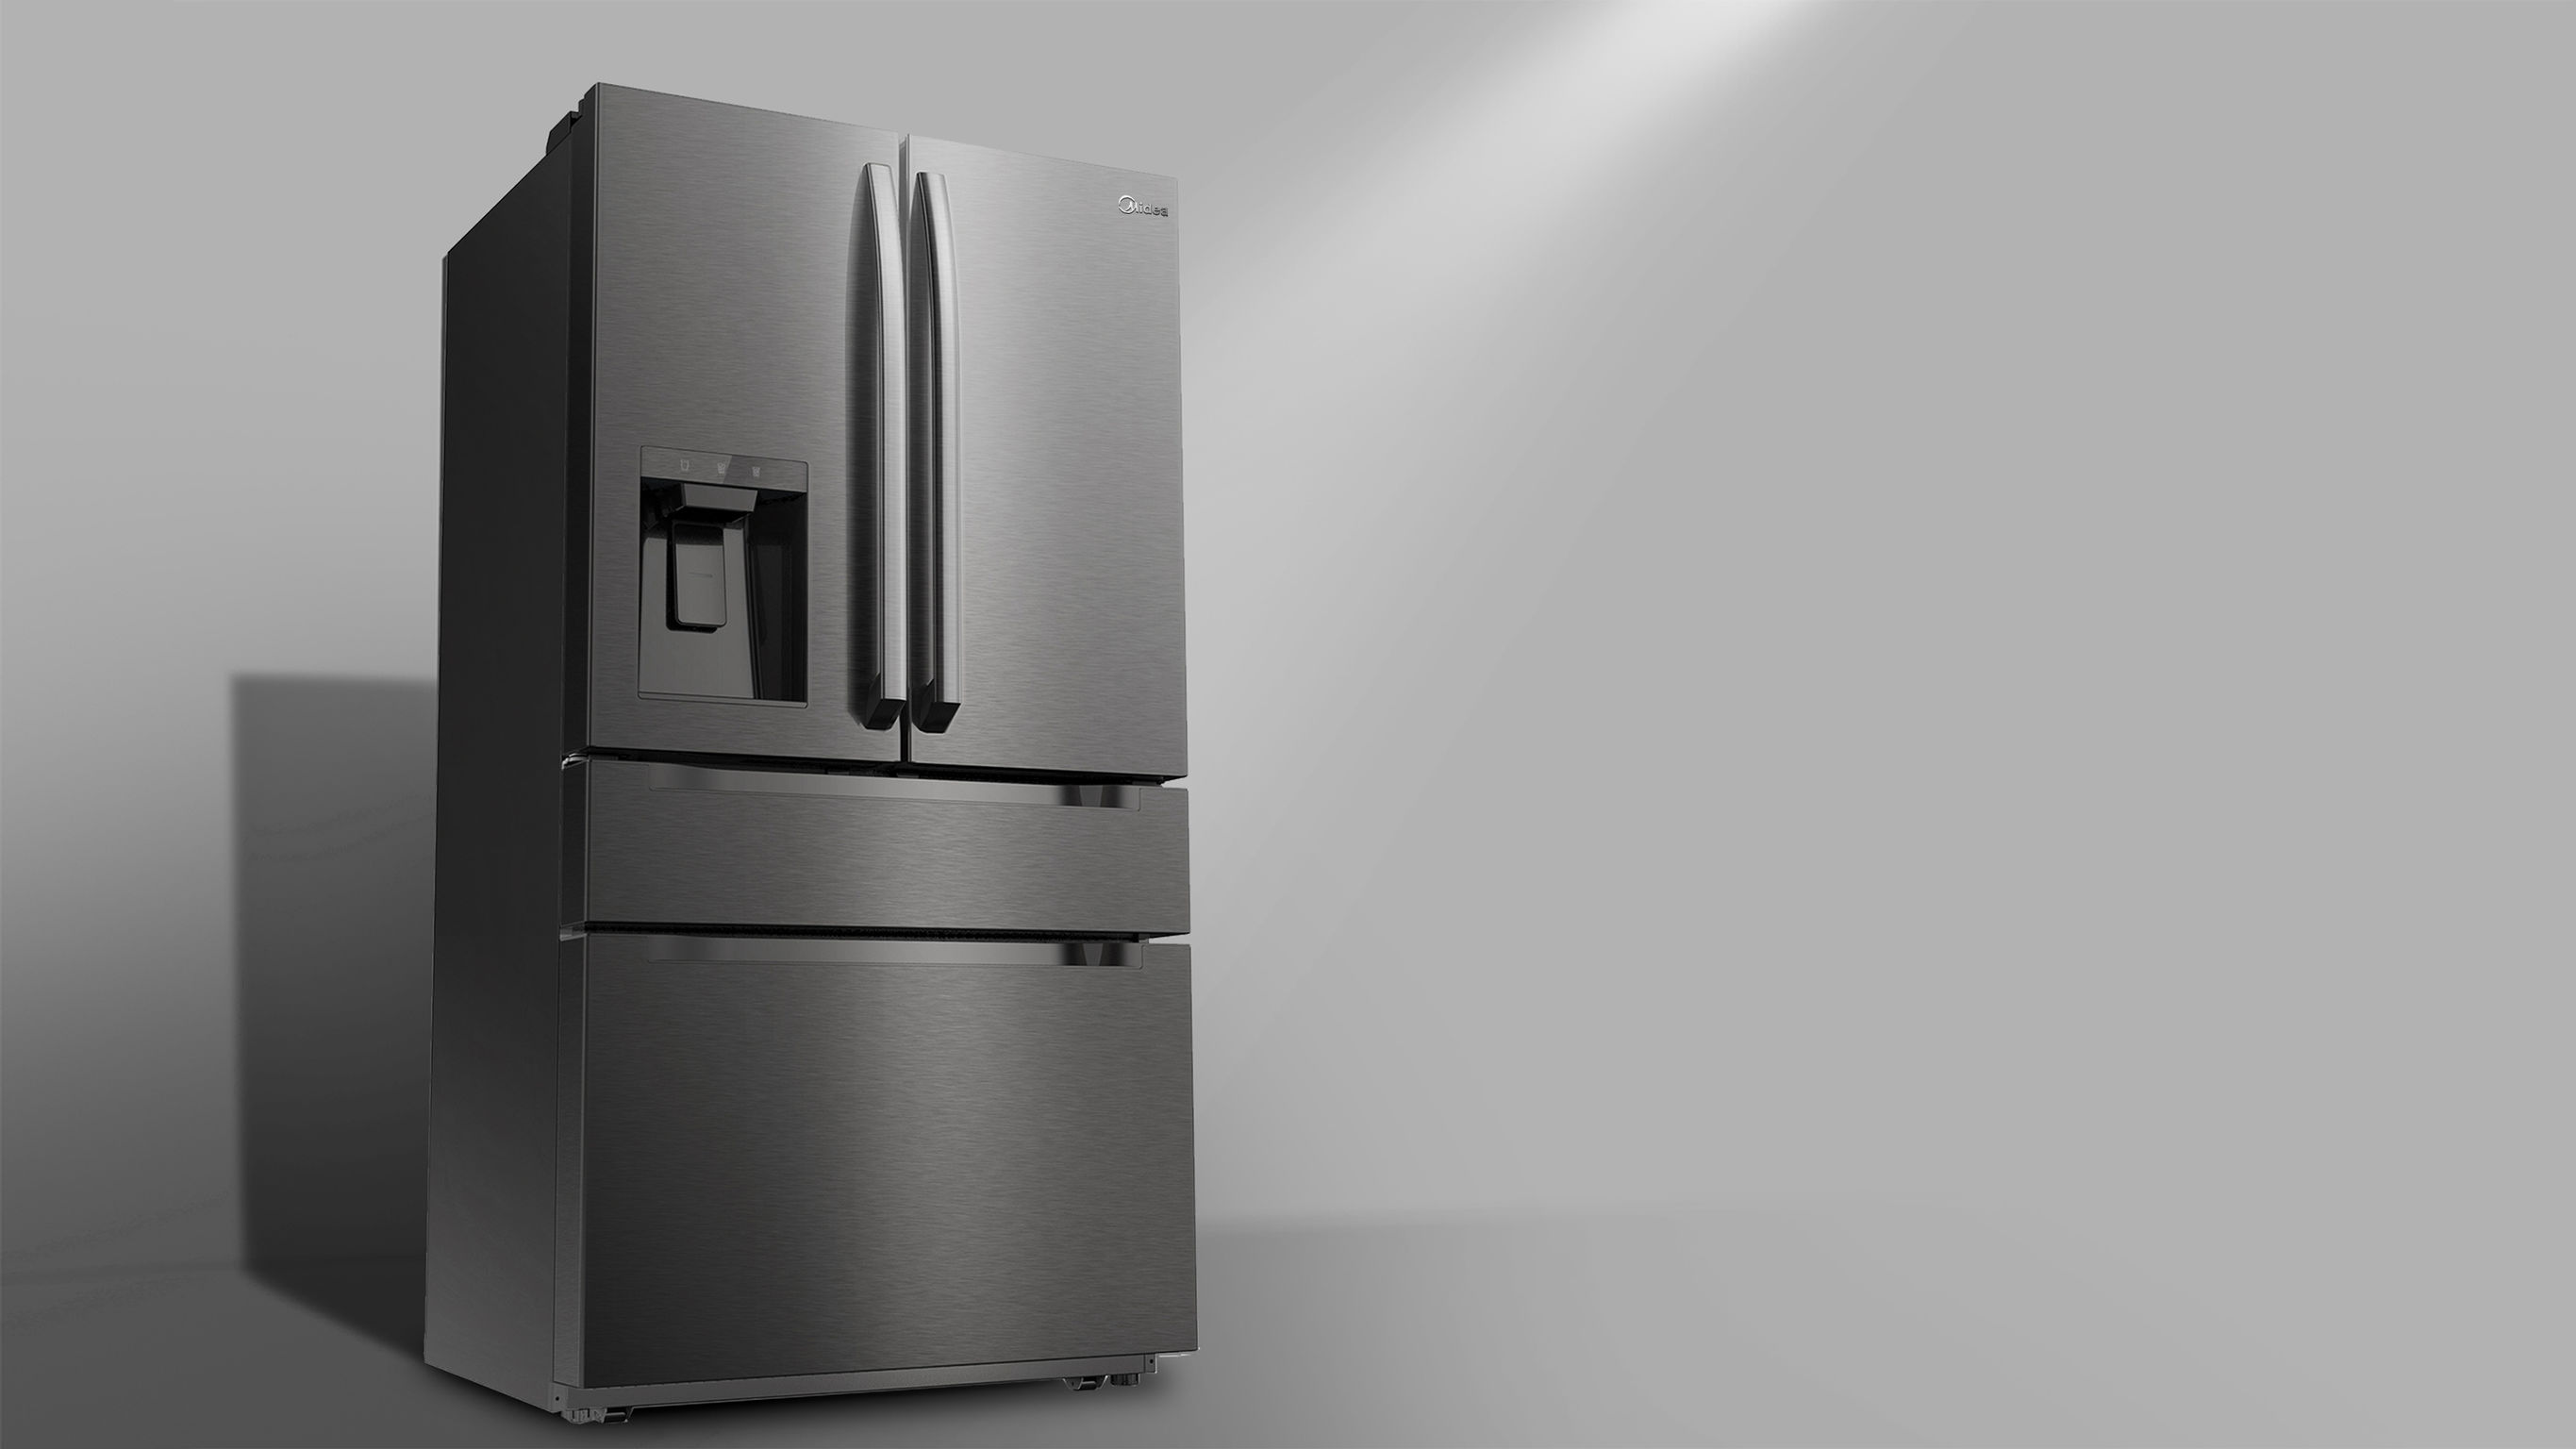 North American French door series refrigerators